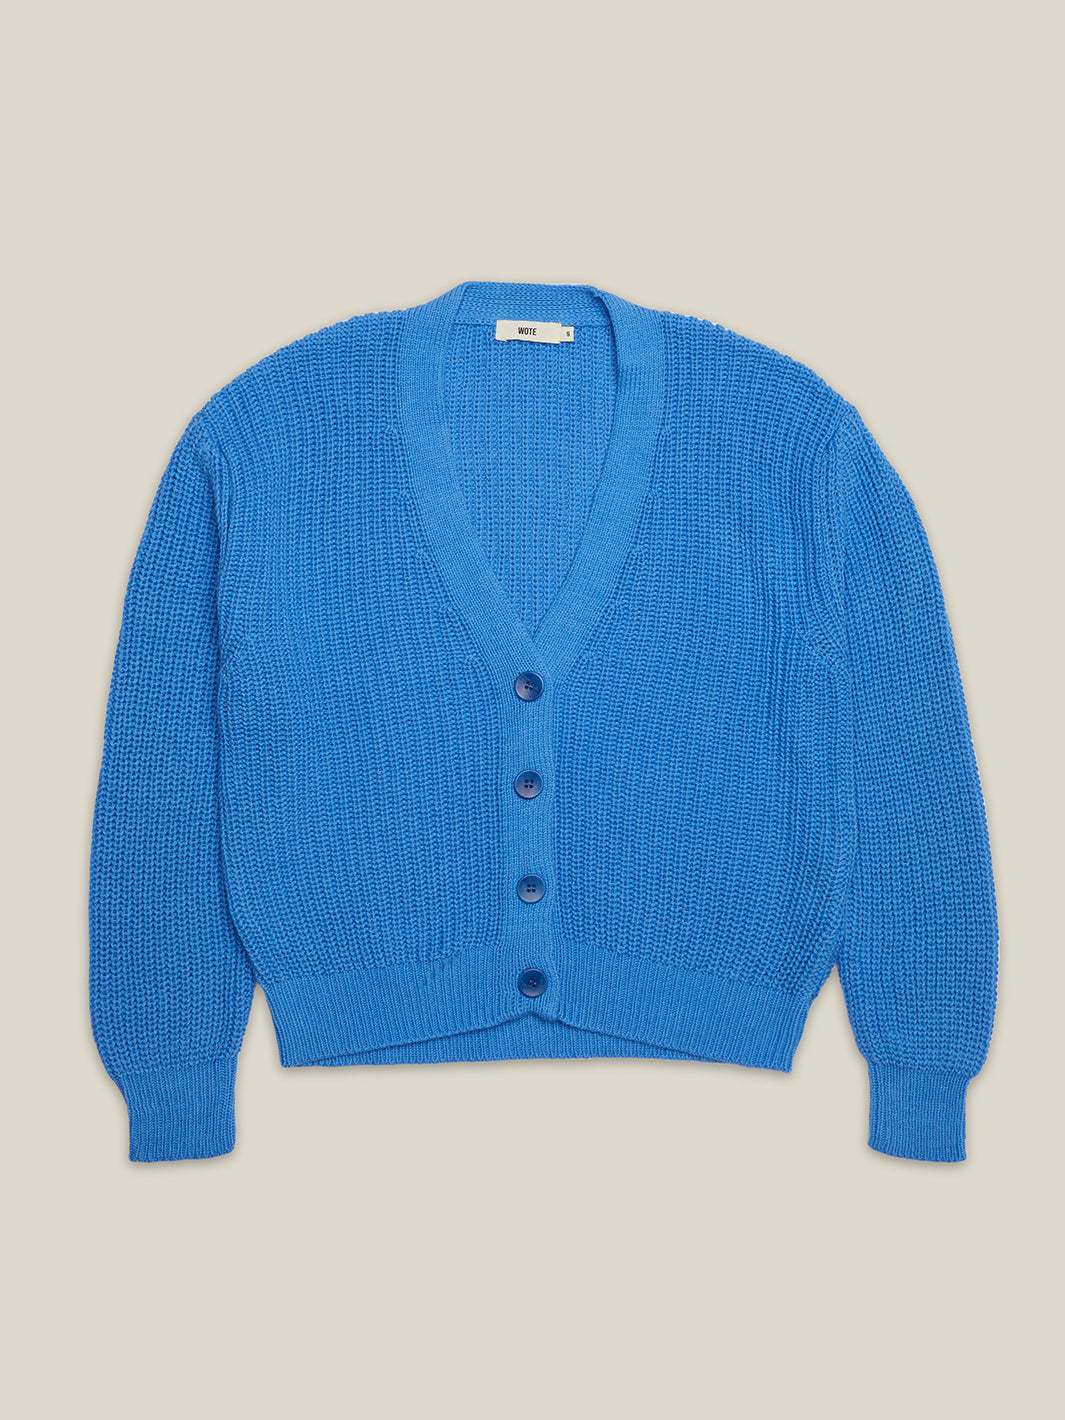 Damen Strick Cardigan blau reine Baumwolle GOTS zertifiziert in Italien produziert